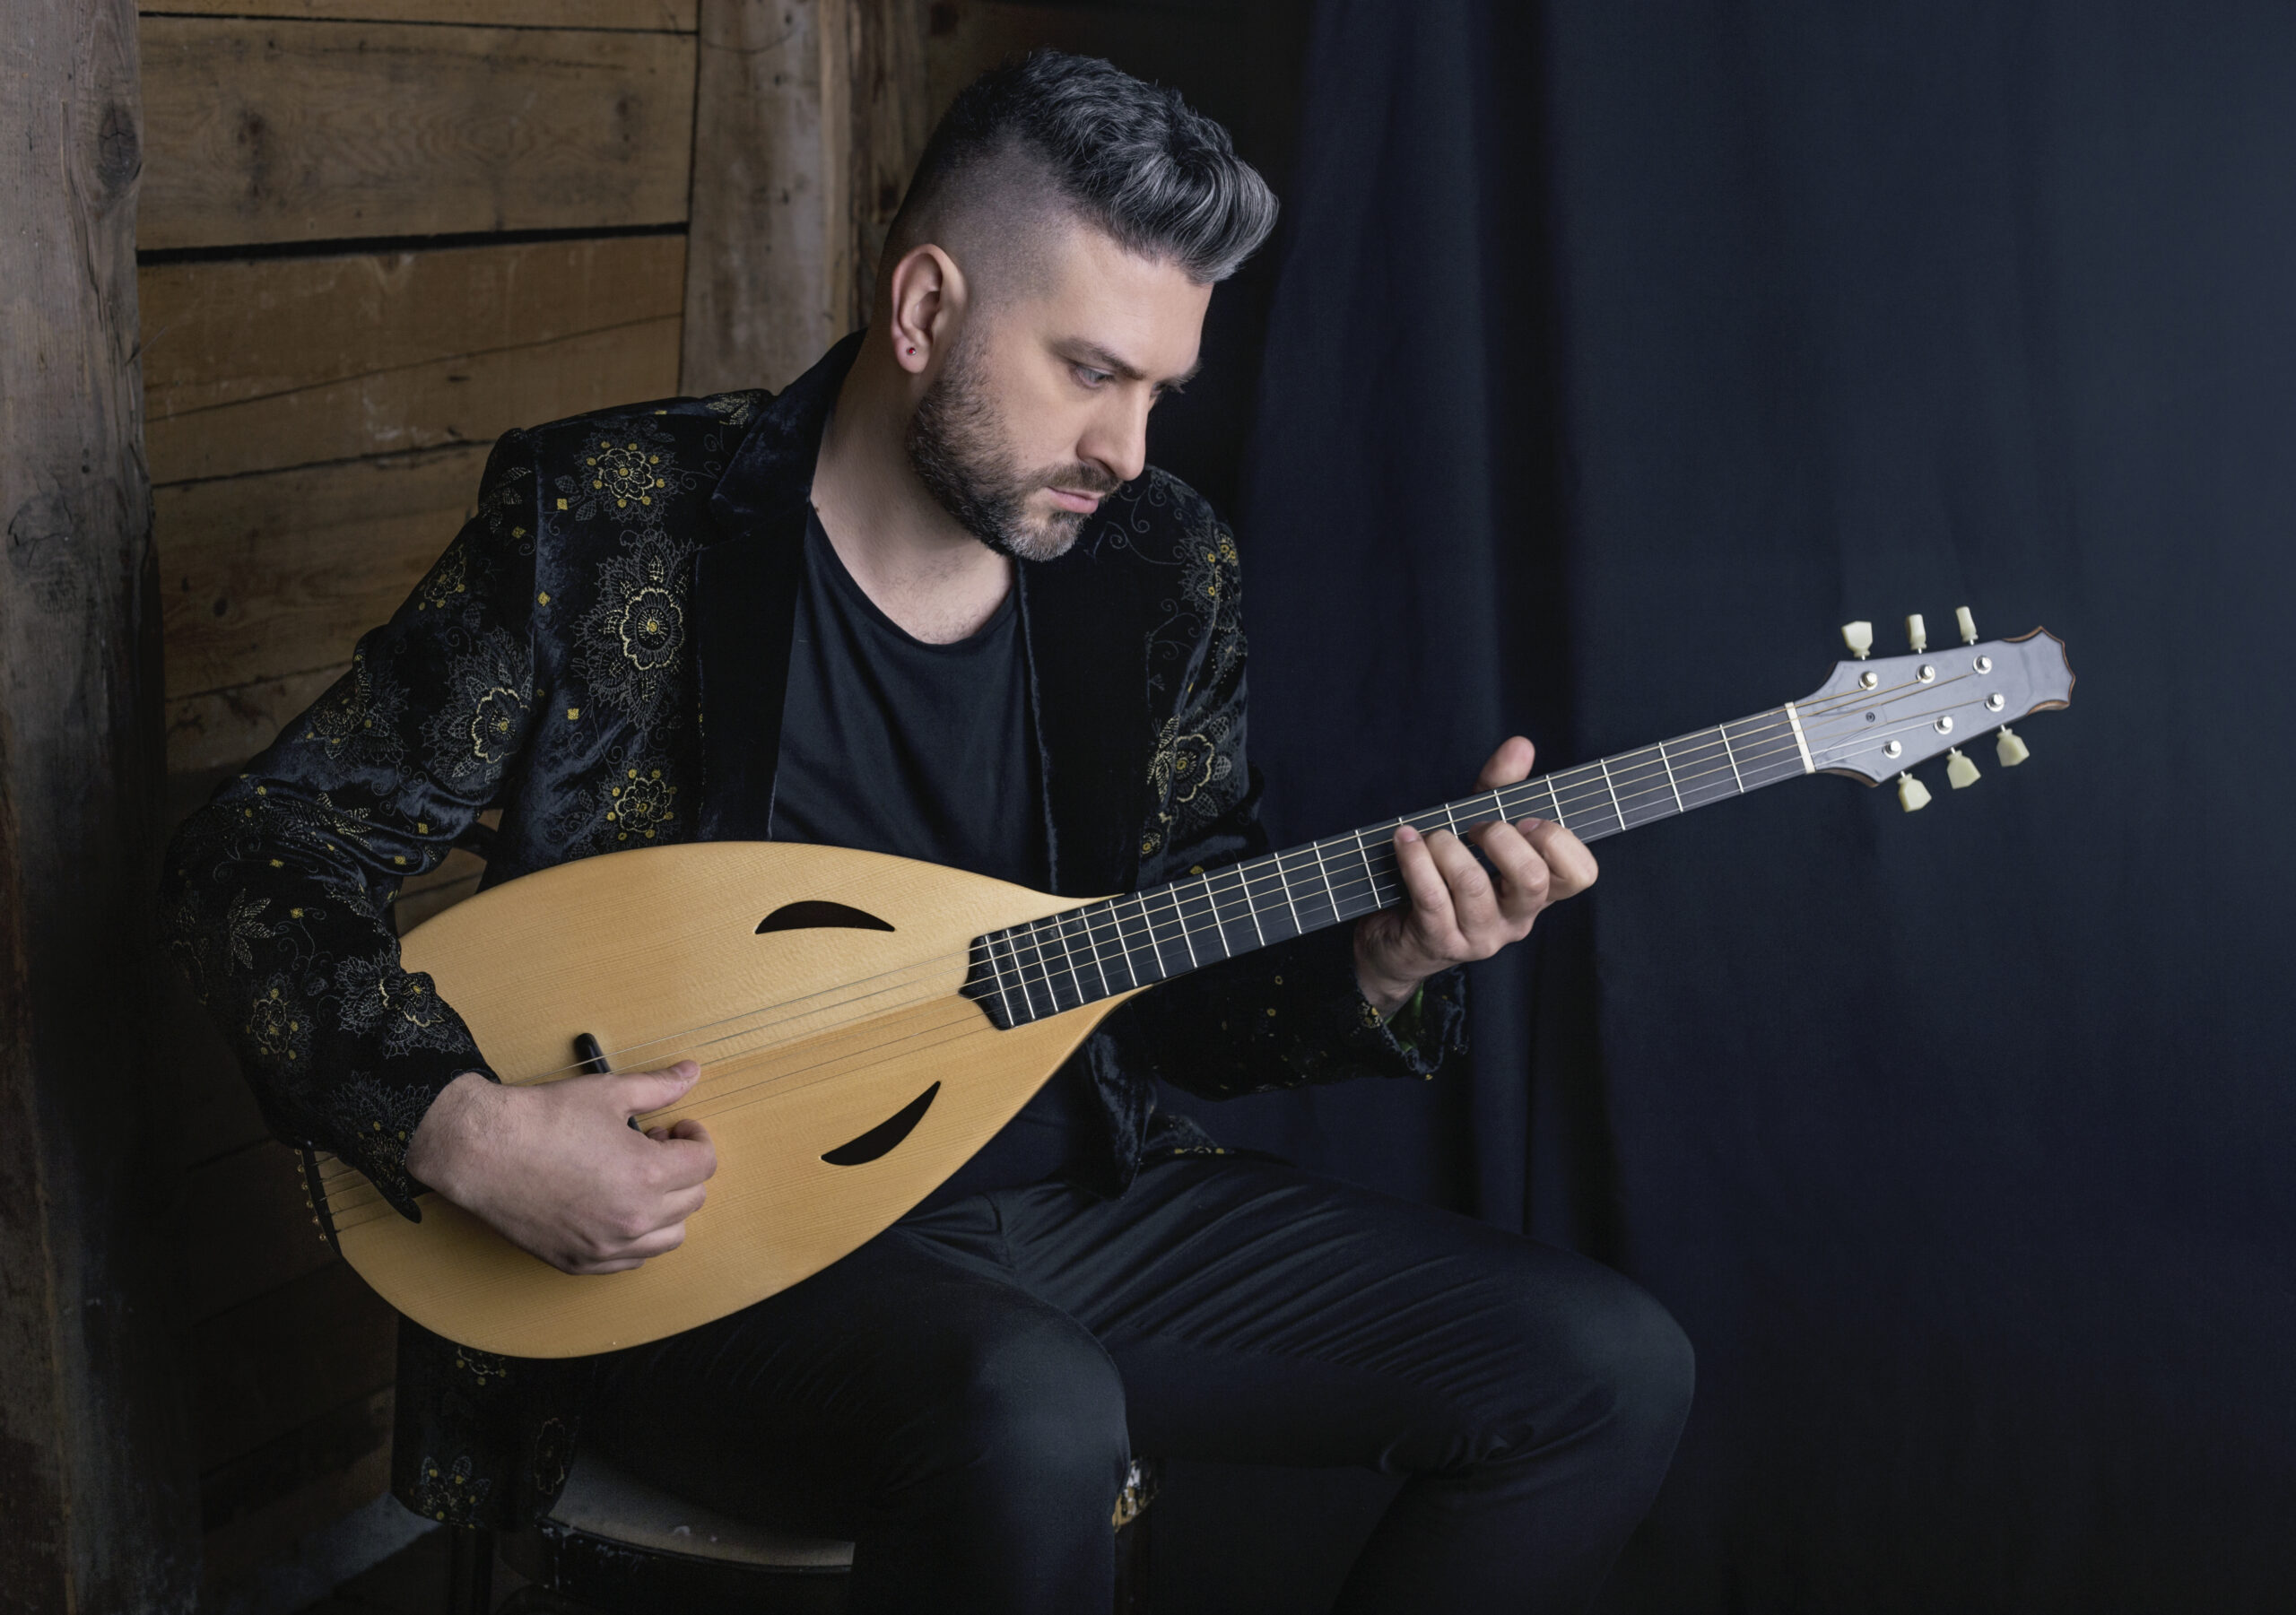  Damir Imamović: Songs make getting through anything easier